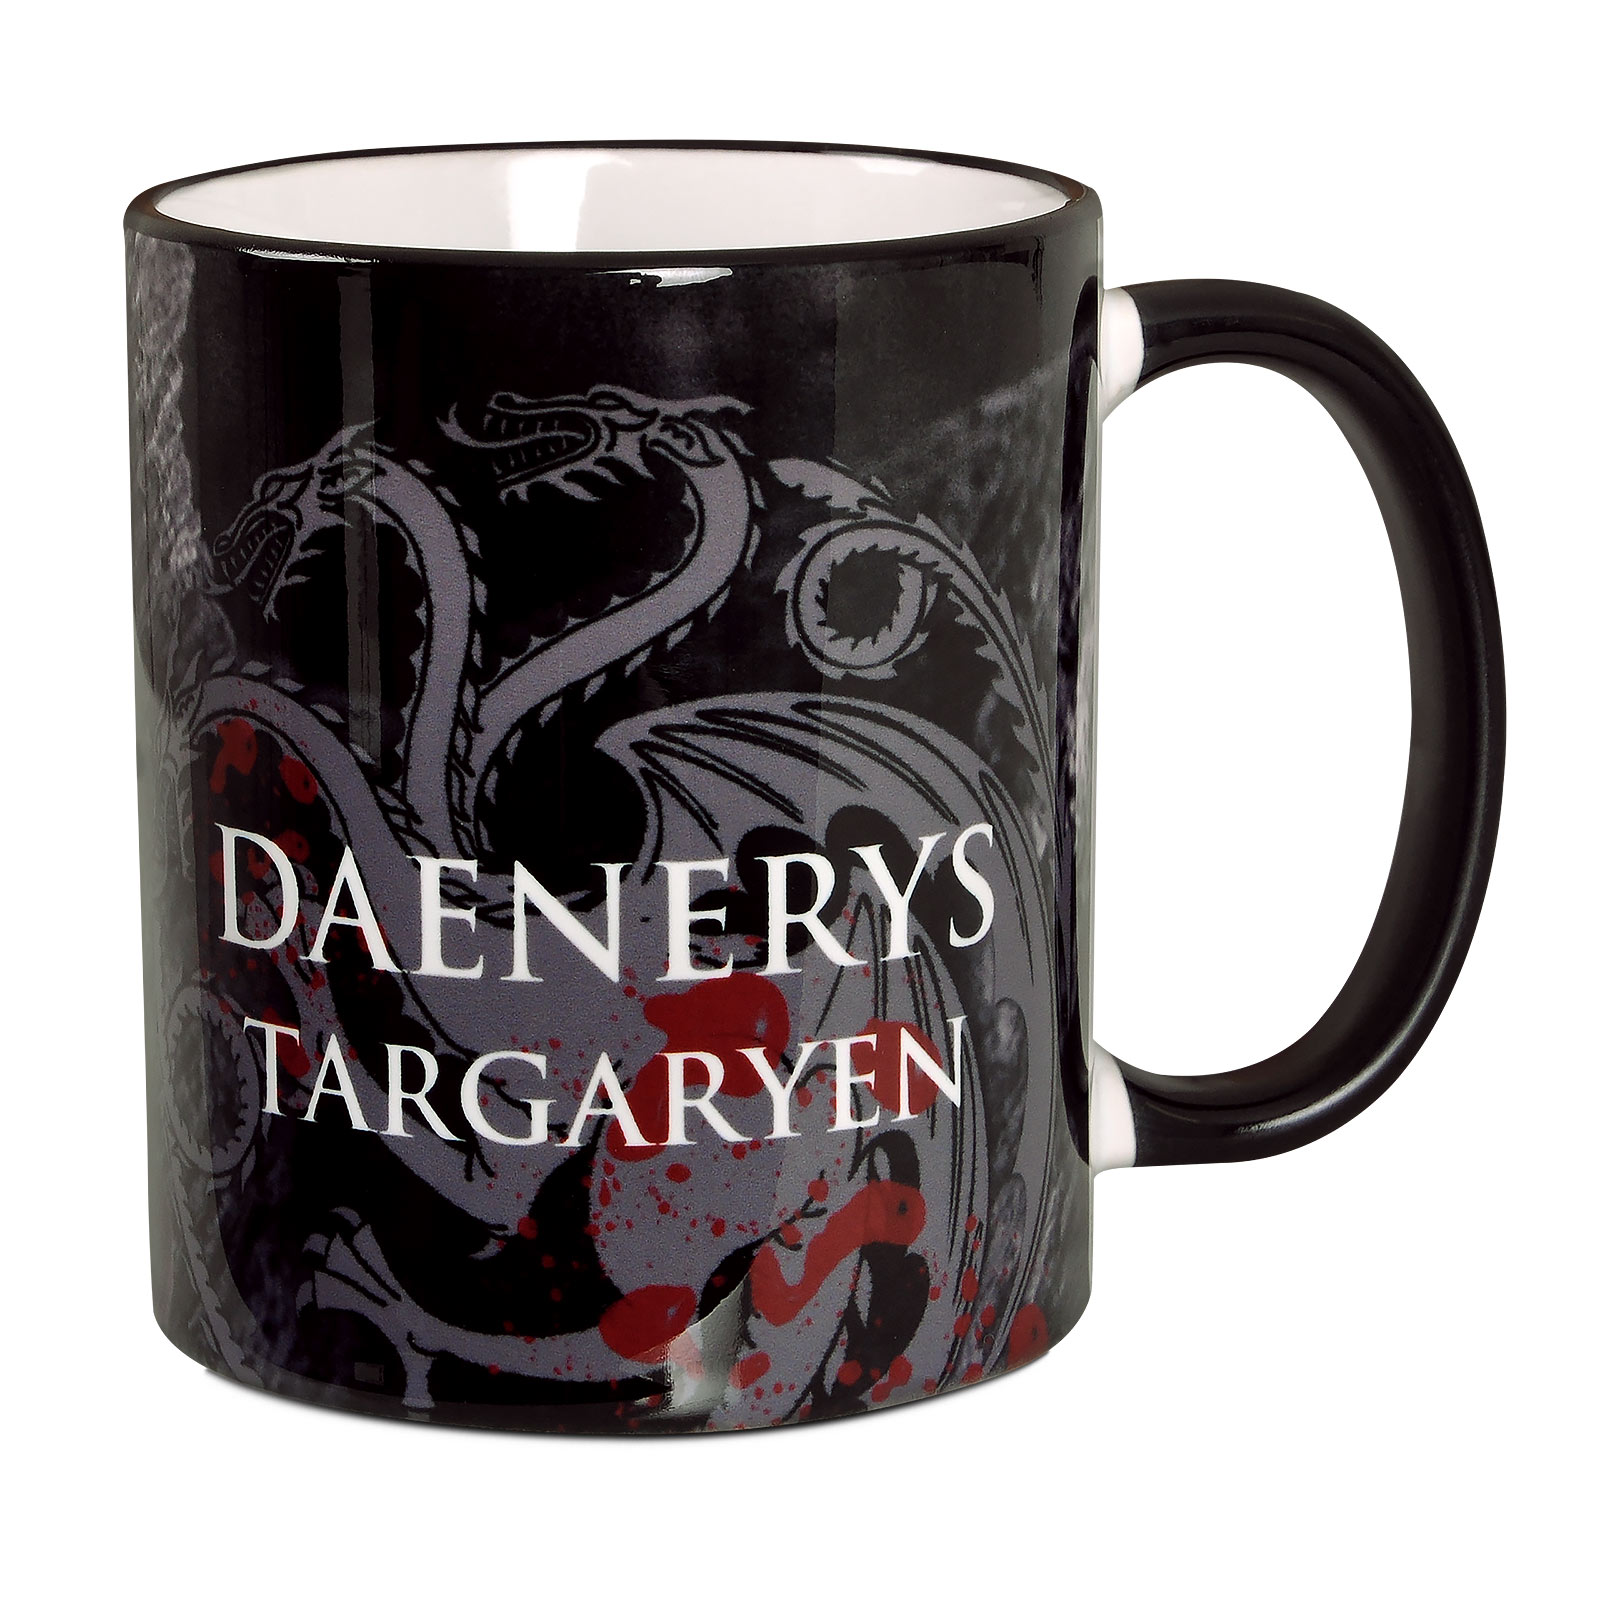 Daenerys Targaryen For The Throne Mug - Game of Thrones